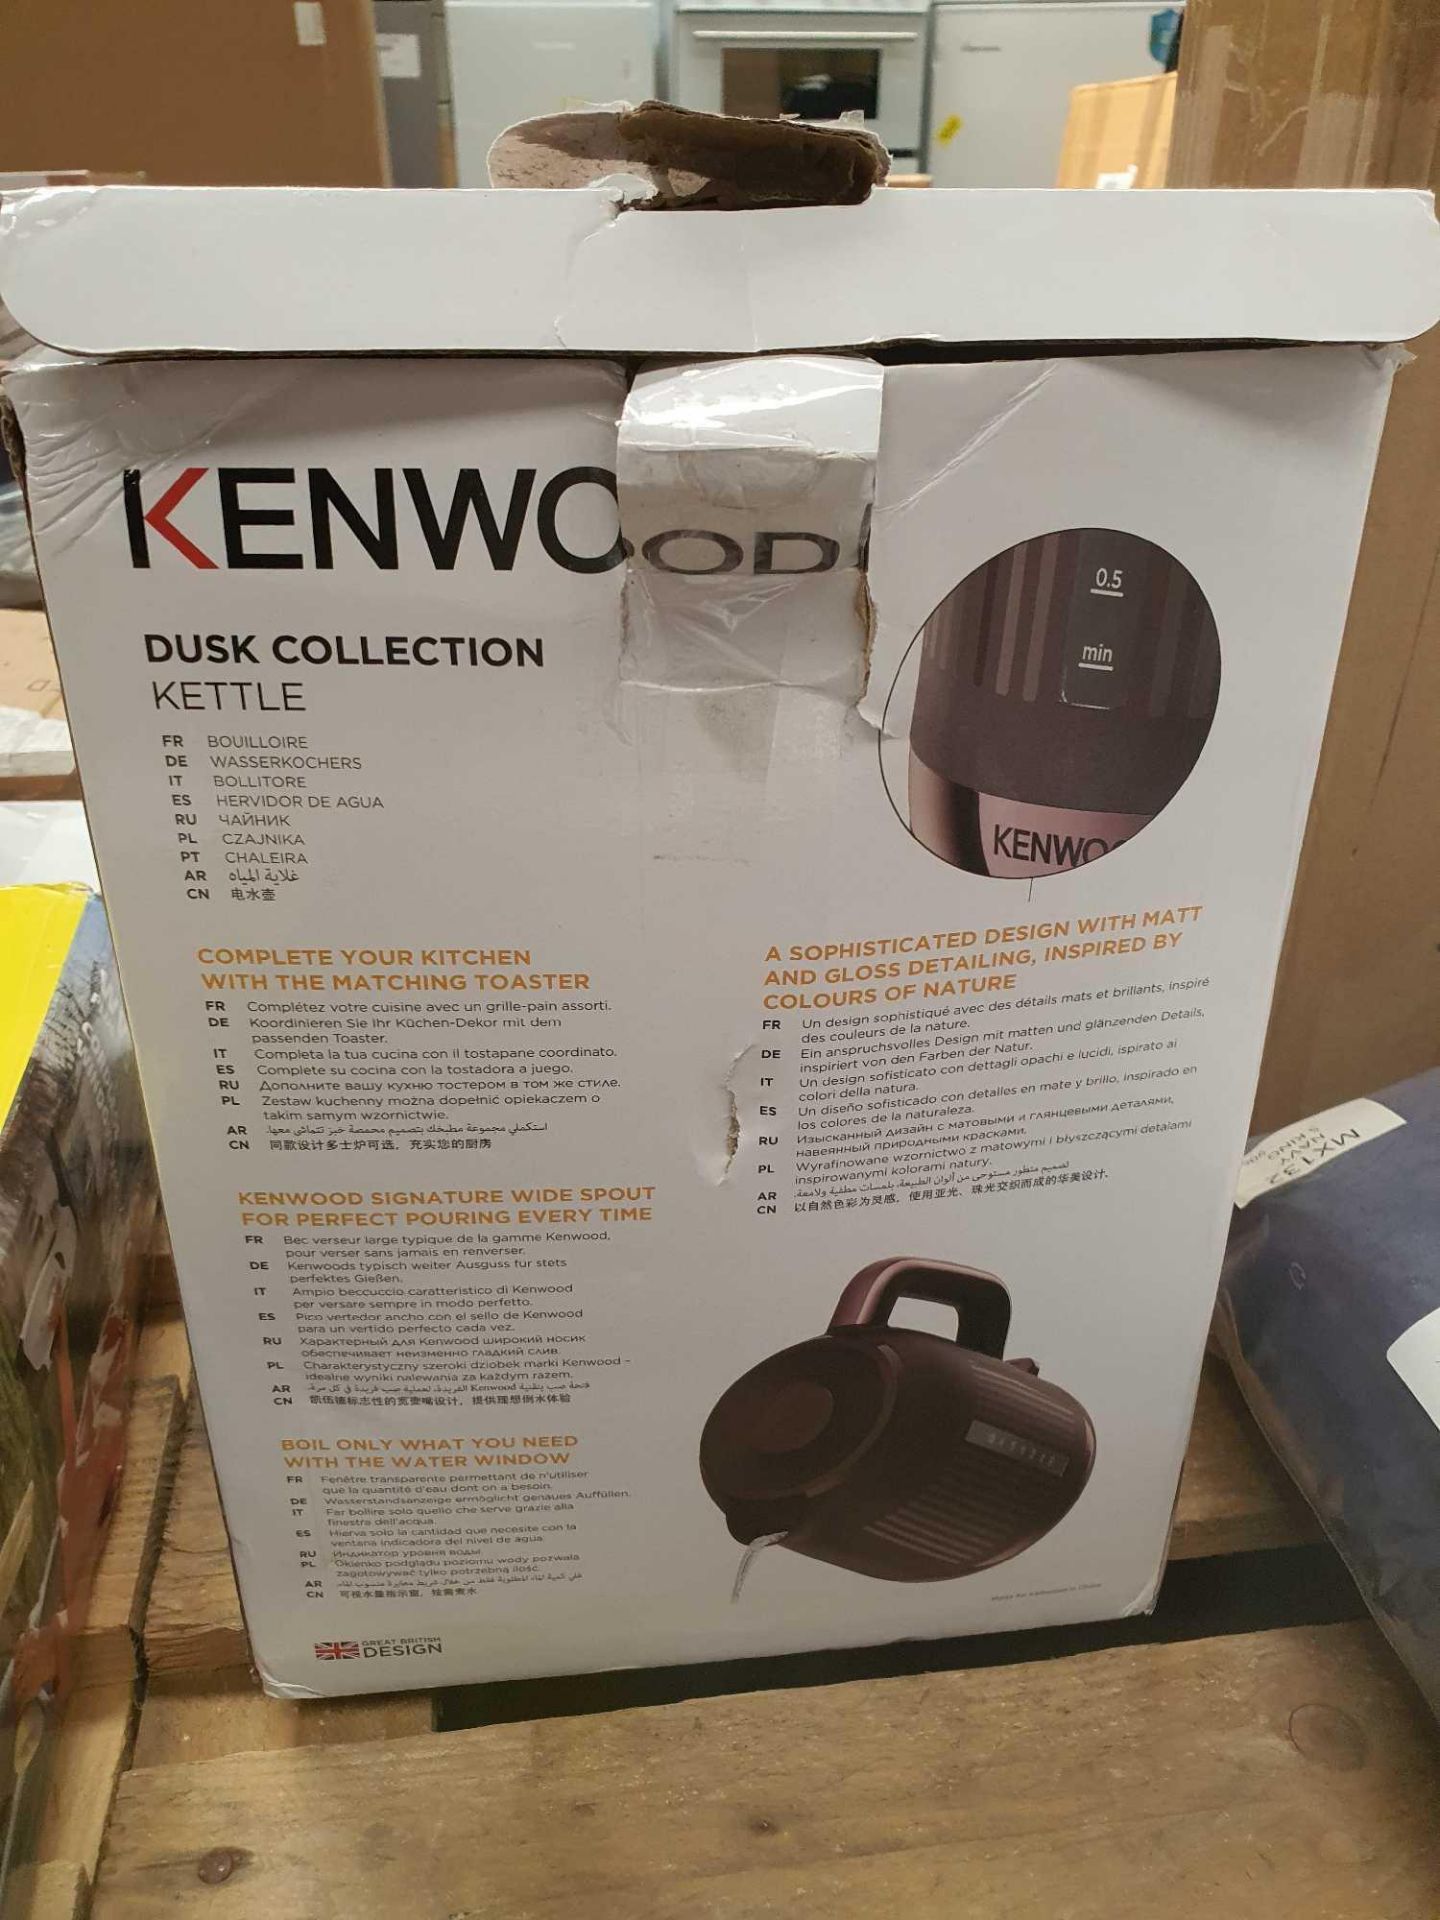 Kenwood kettle - no lid.